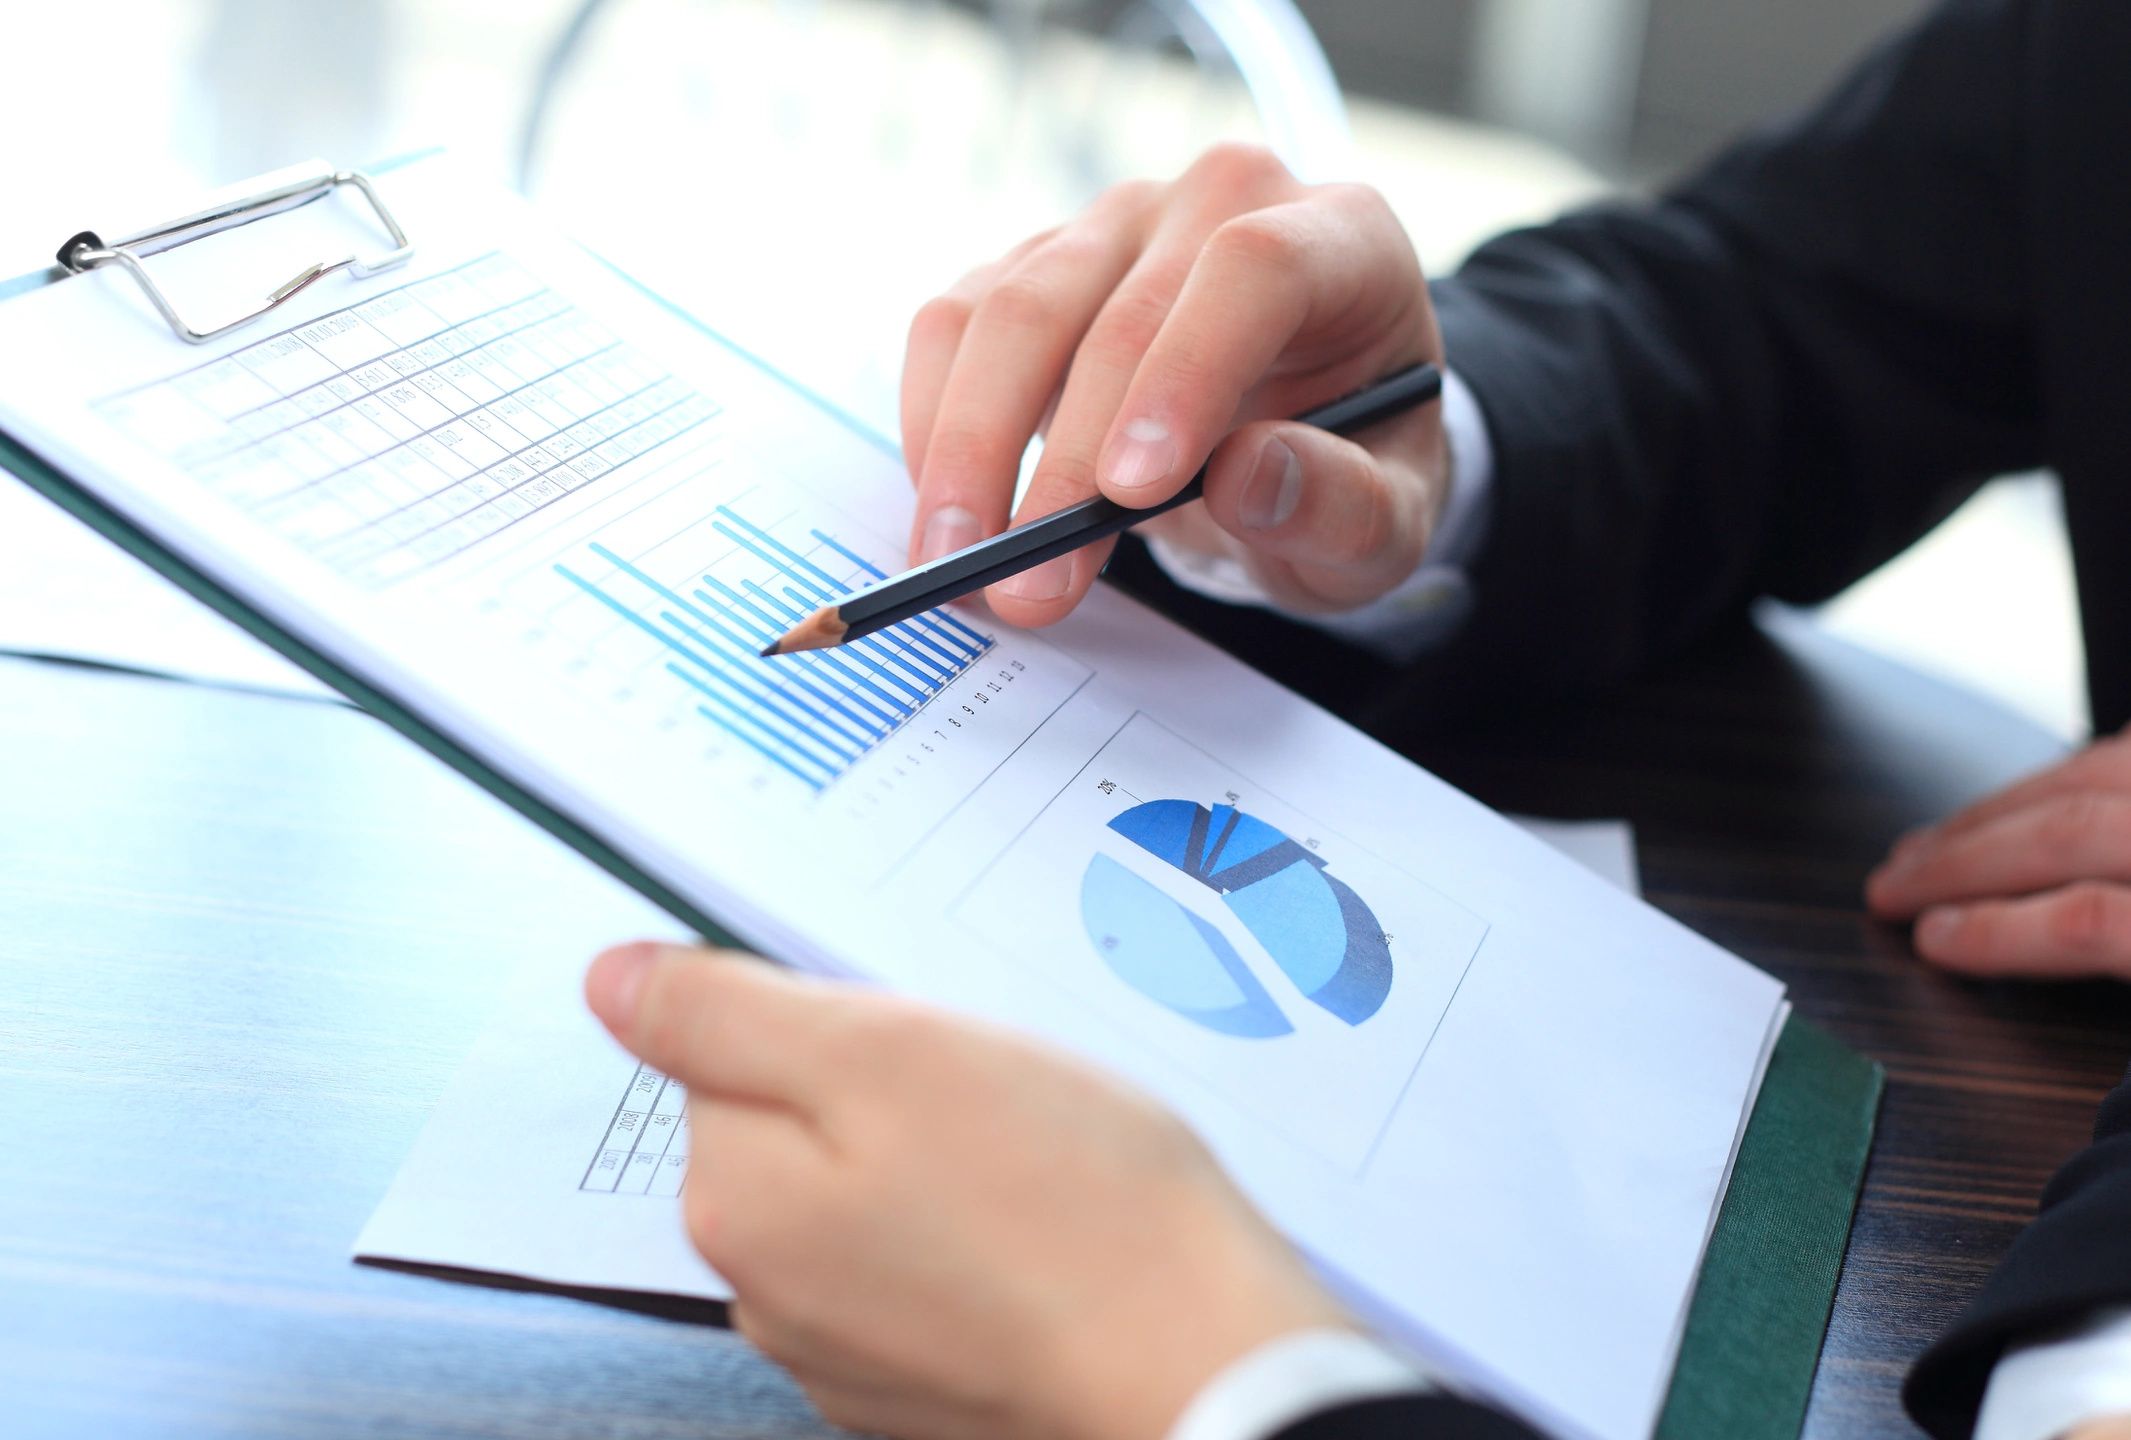 Identifying business analysis performance improvements